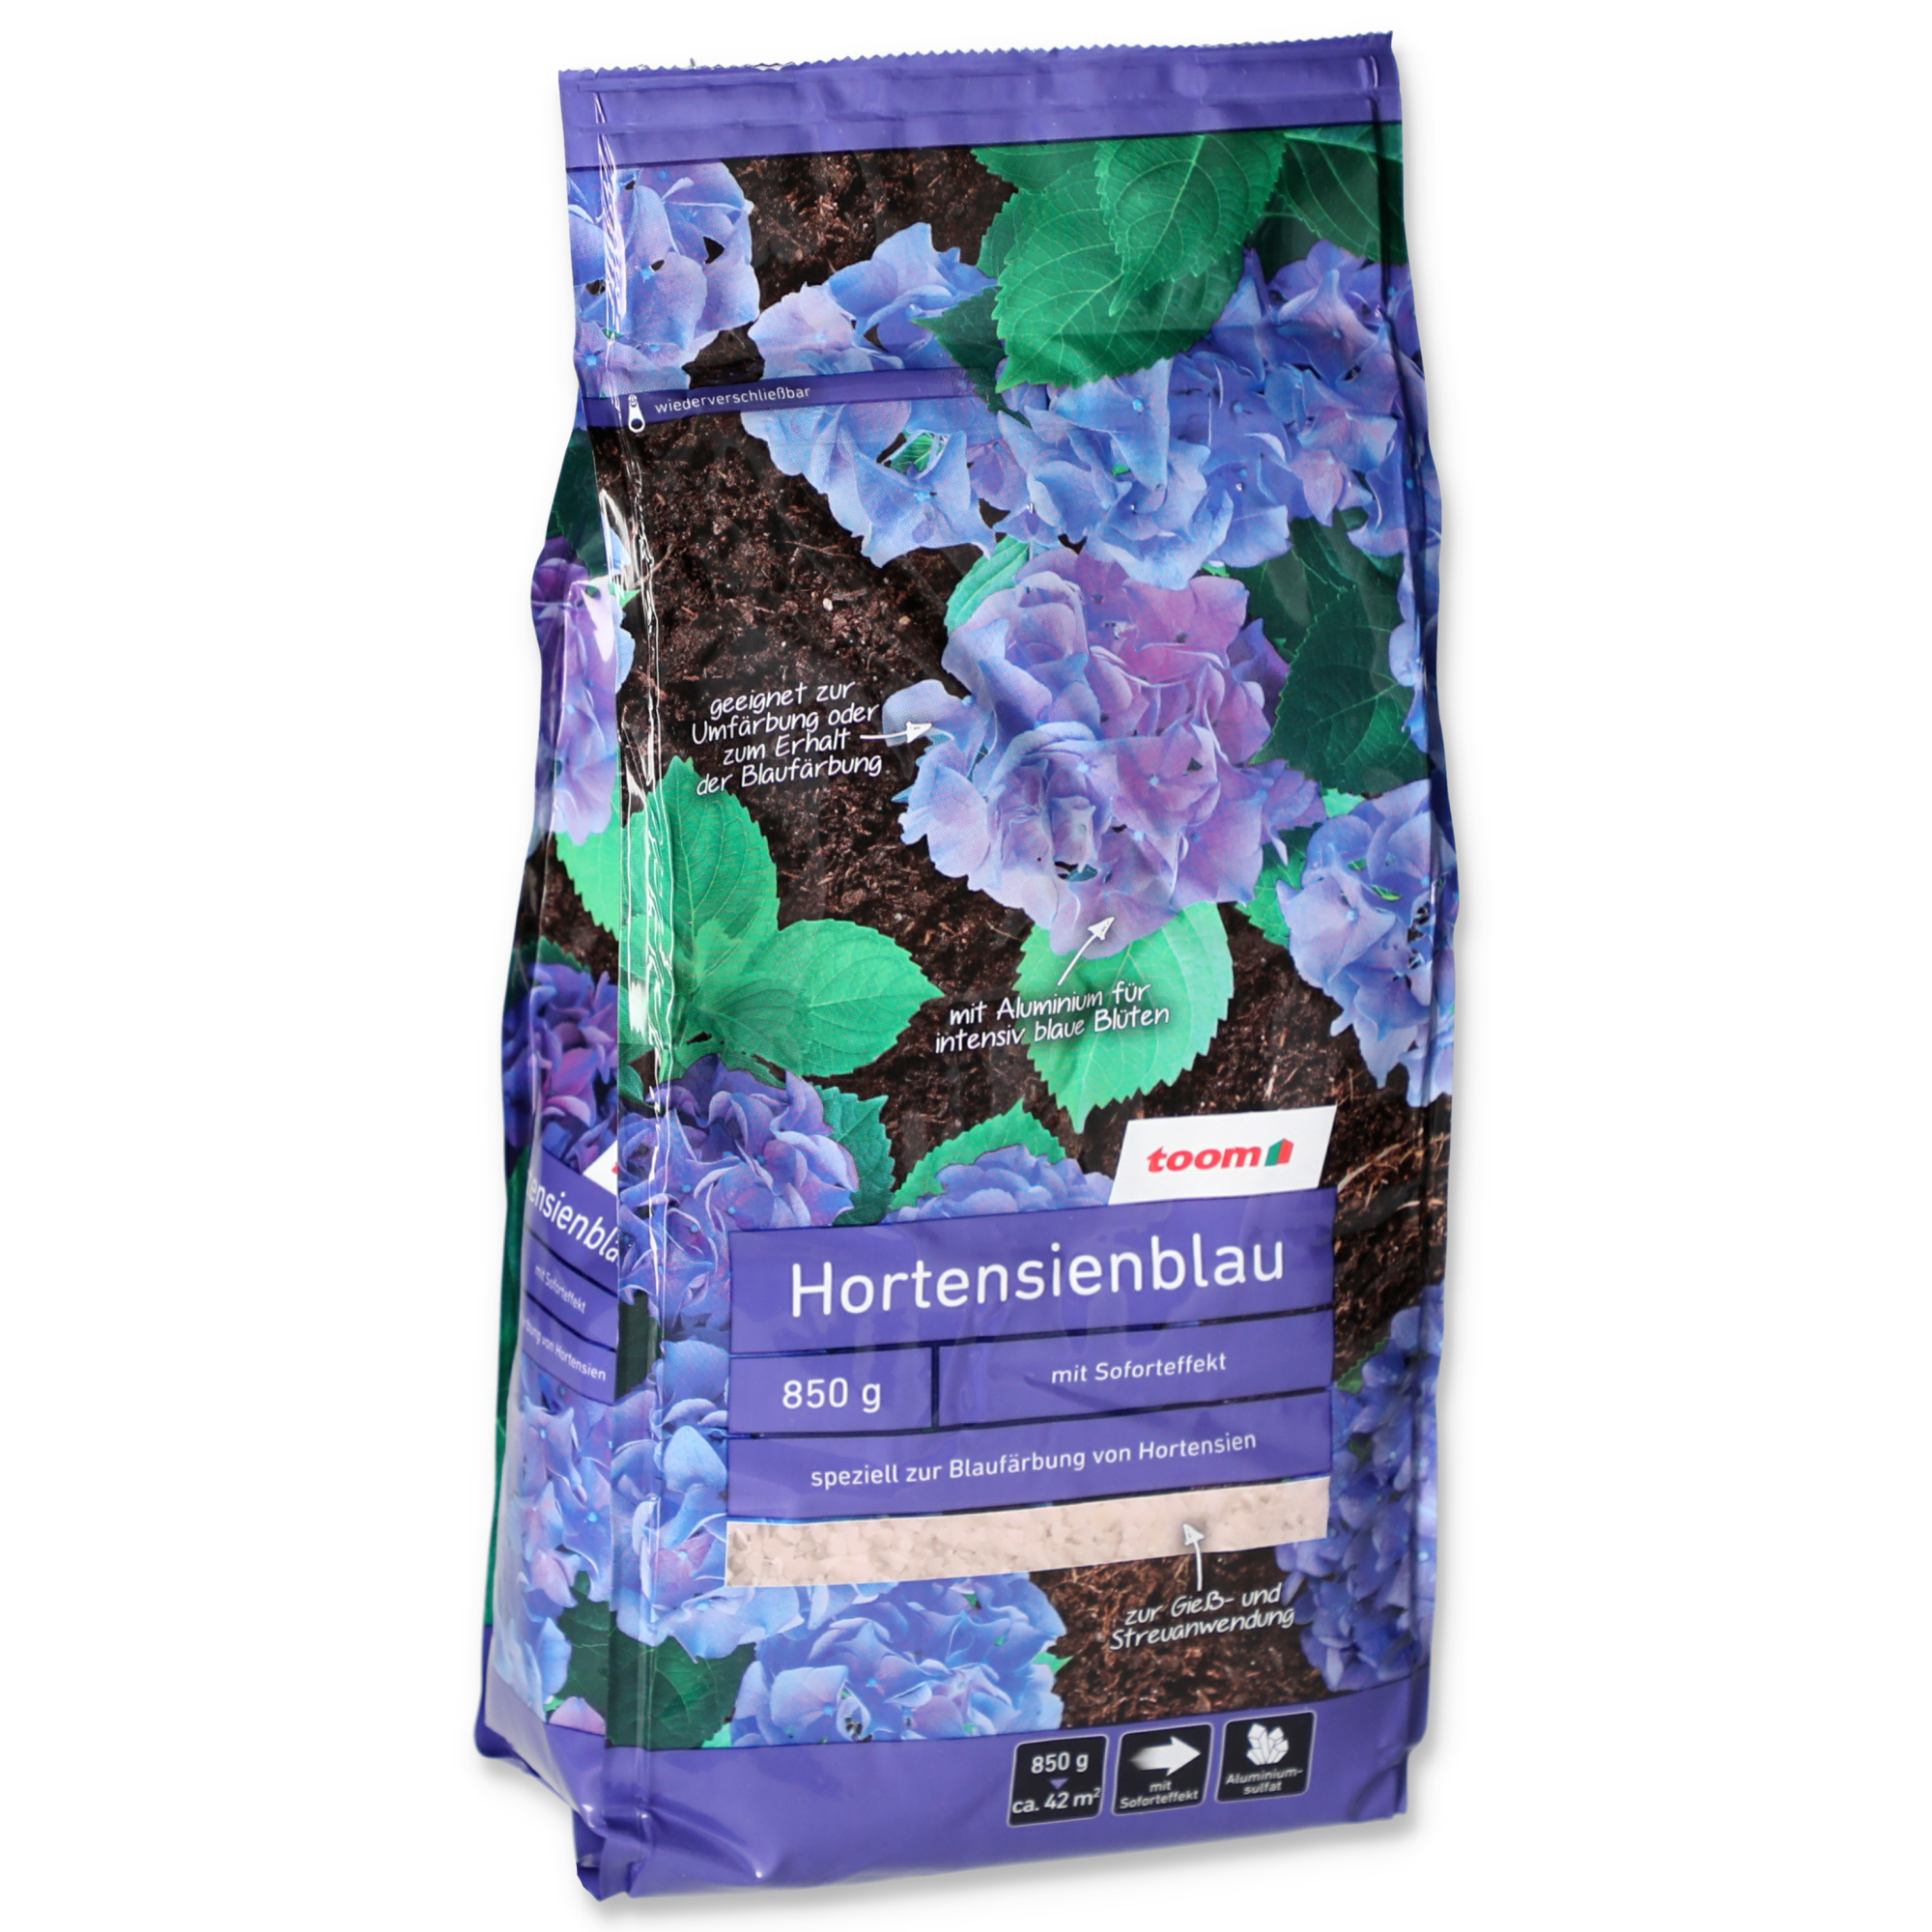 Hortensienblau 850 g + product picture